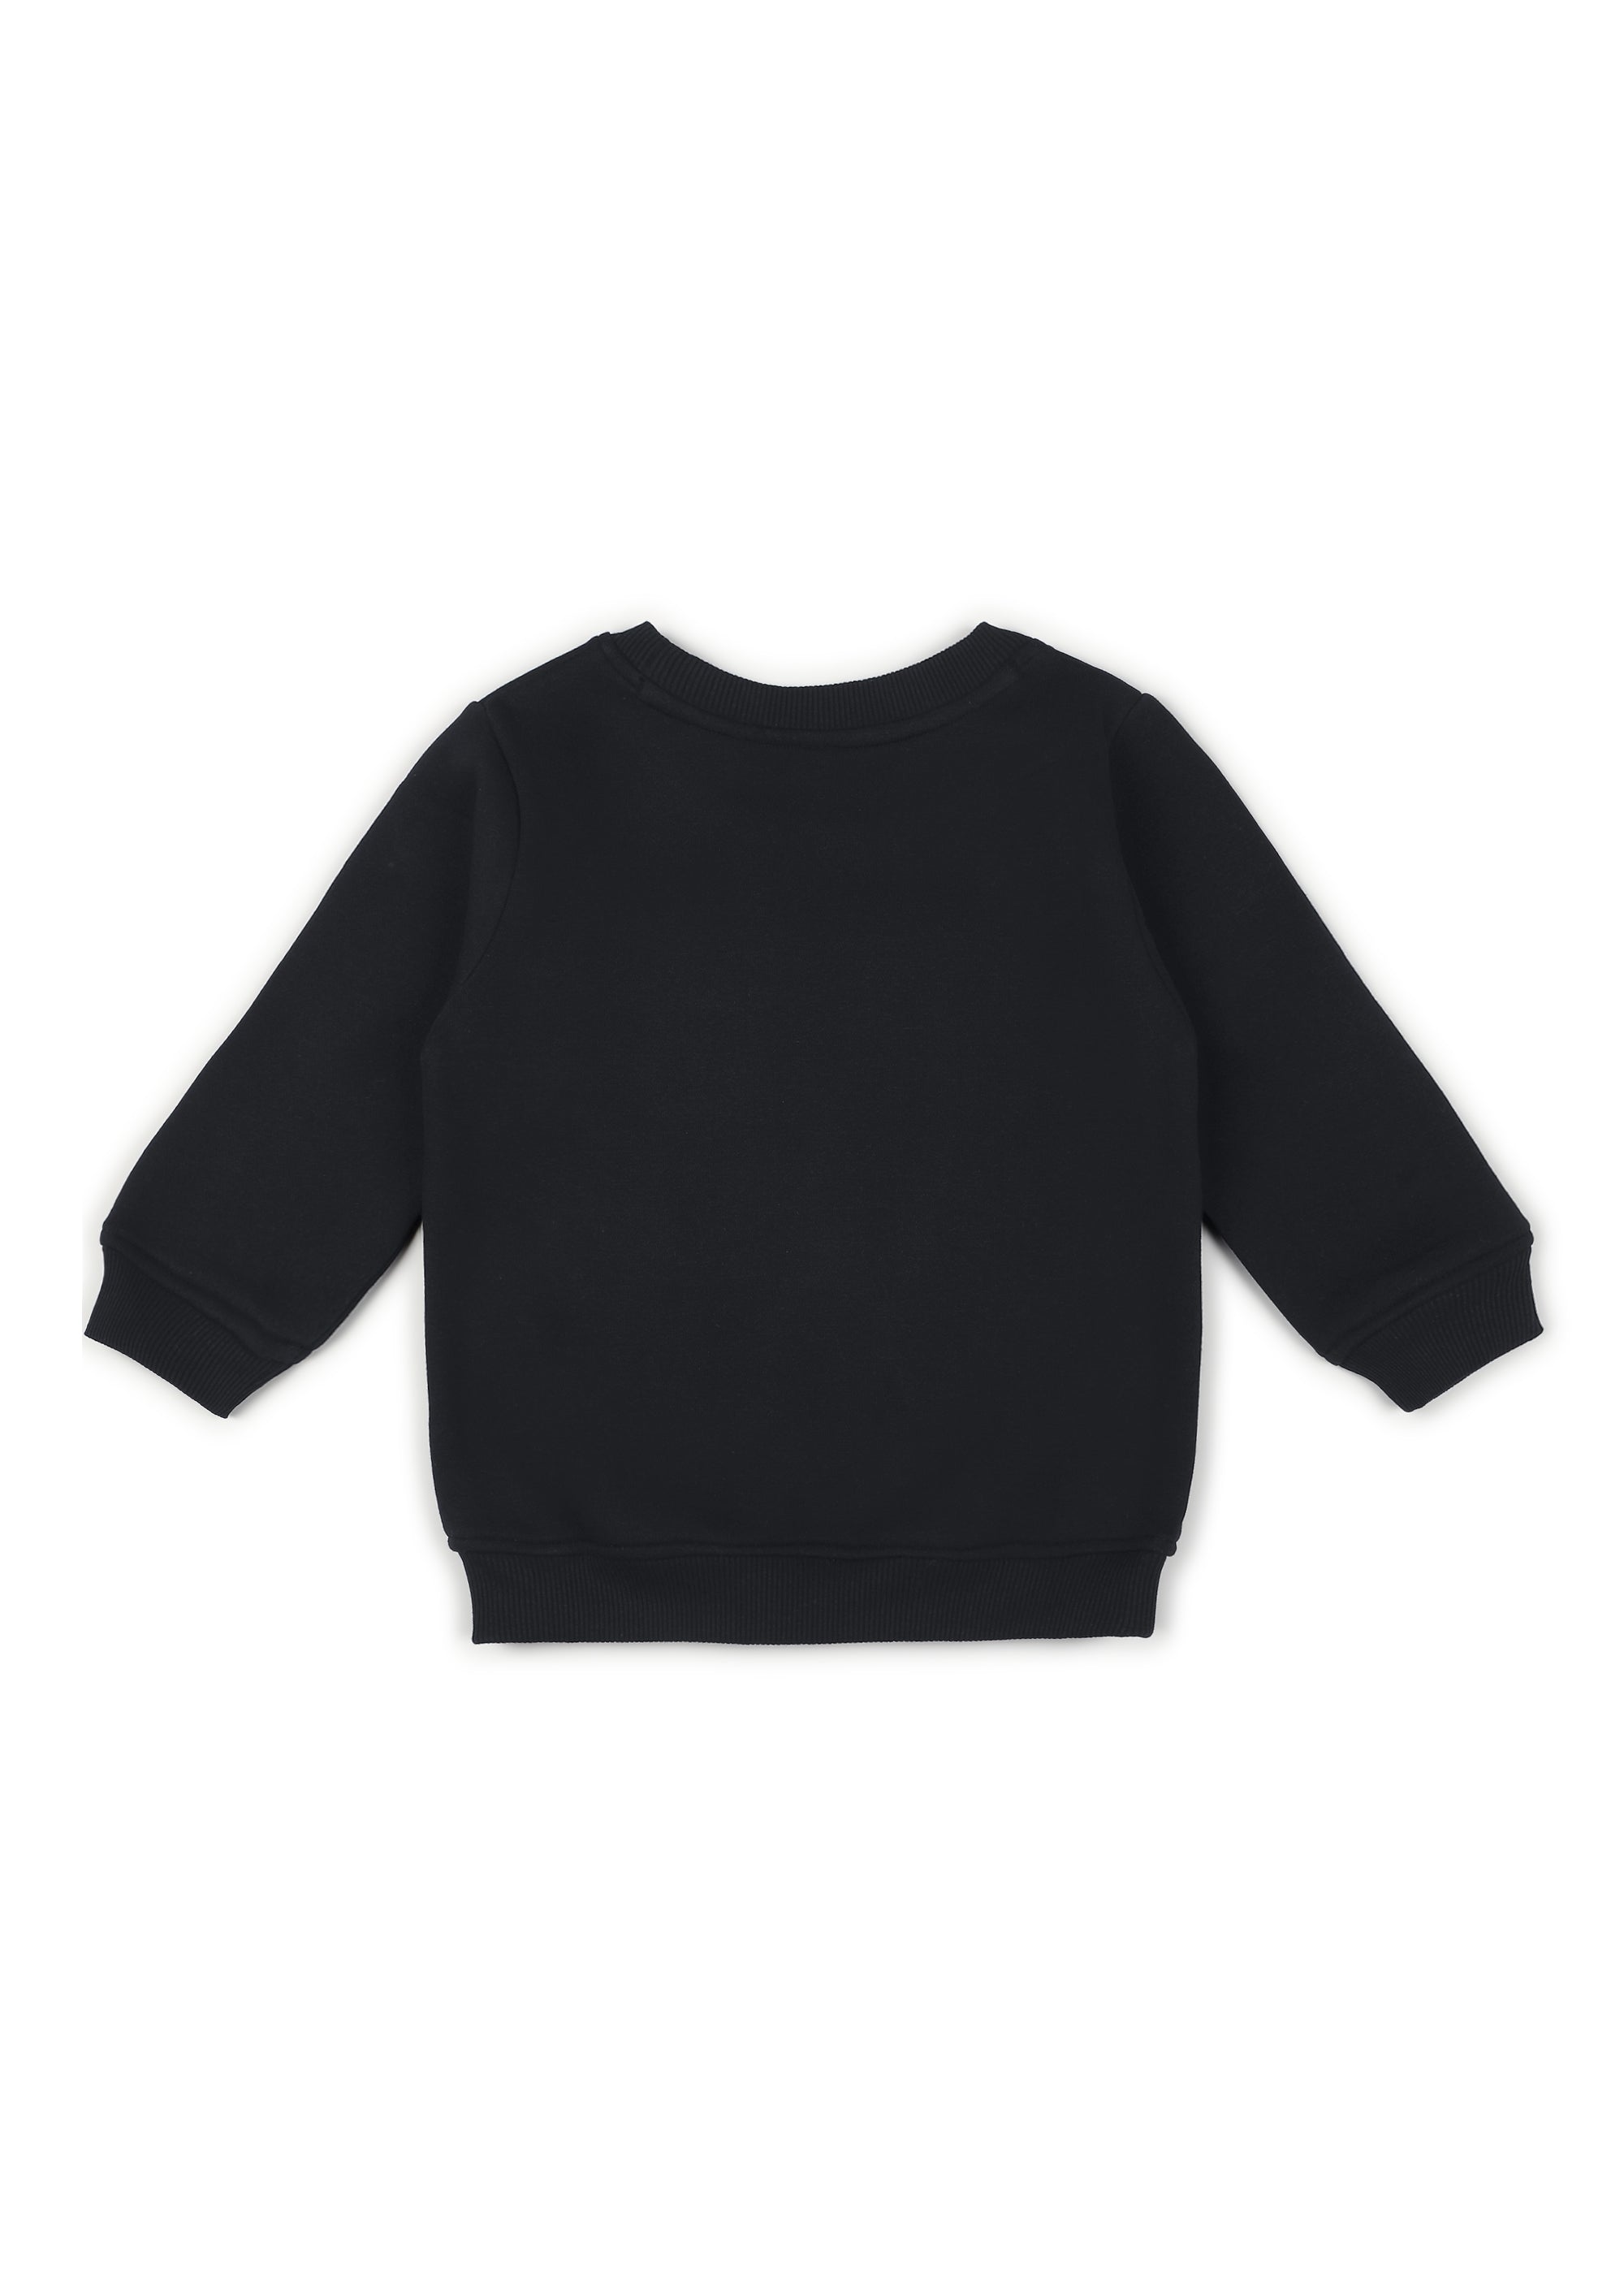 Paw Patrol Logo Black Print Cotton Fleece Kids Sweatshirt Set - Shopbloom